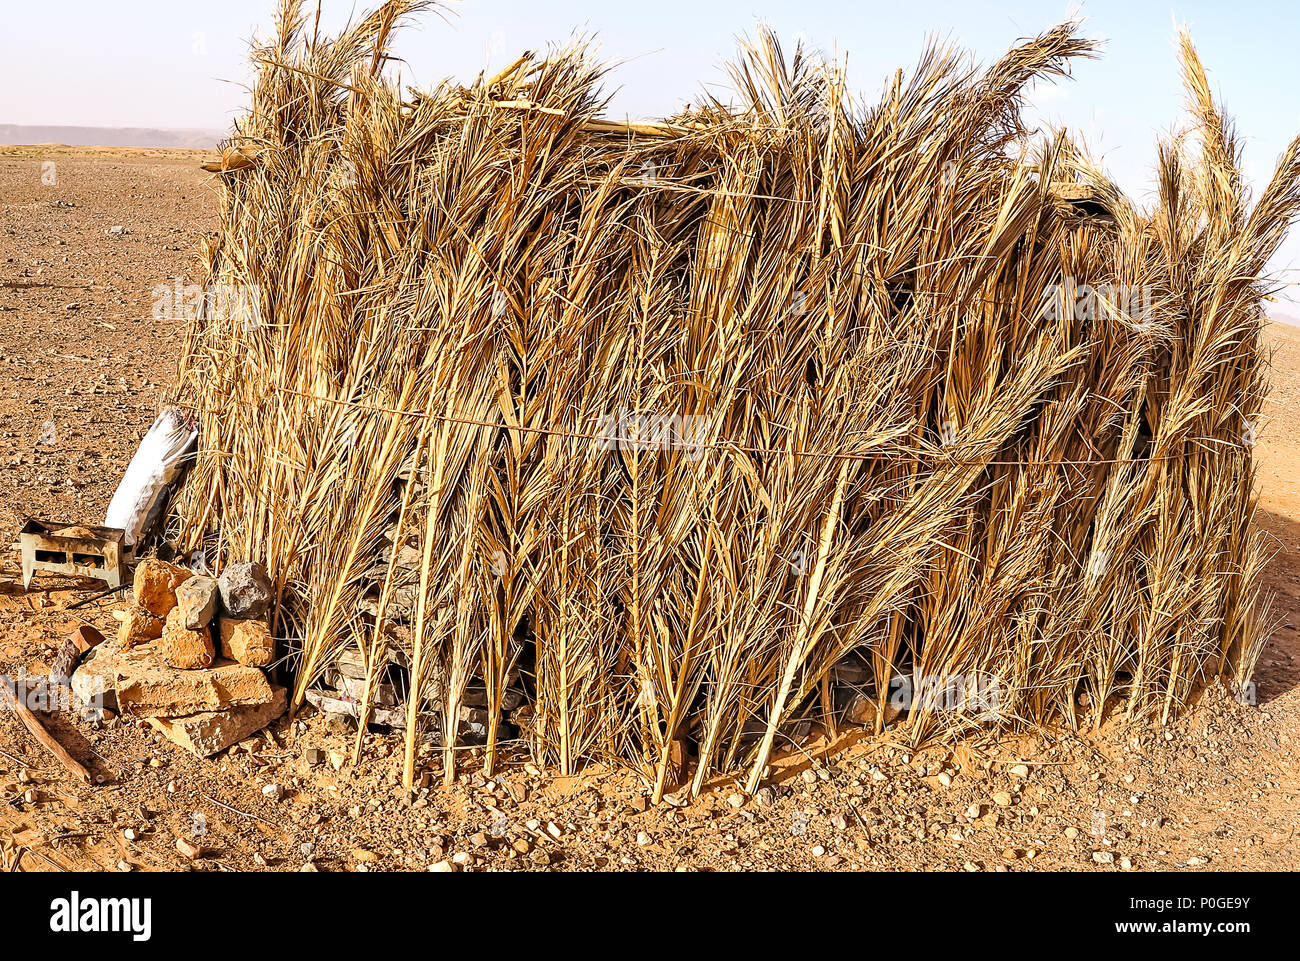 Thatched Bedouin hut in Moroccan desert Stock Photo